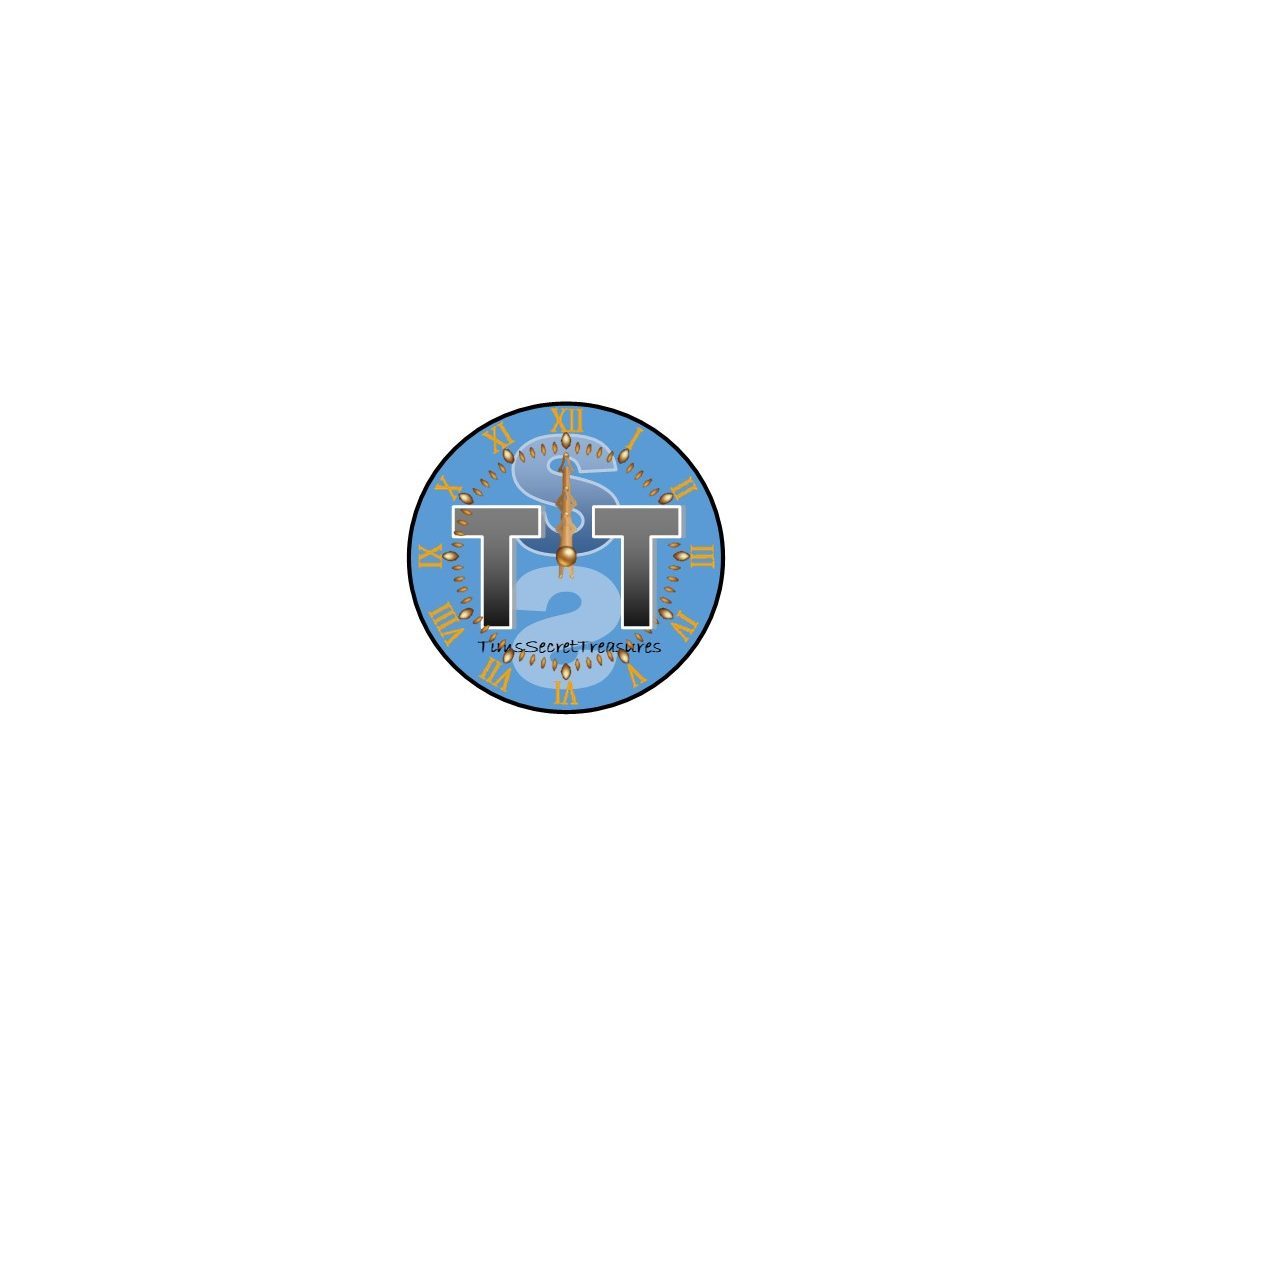 Tims Secret Treasure Logo